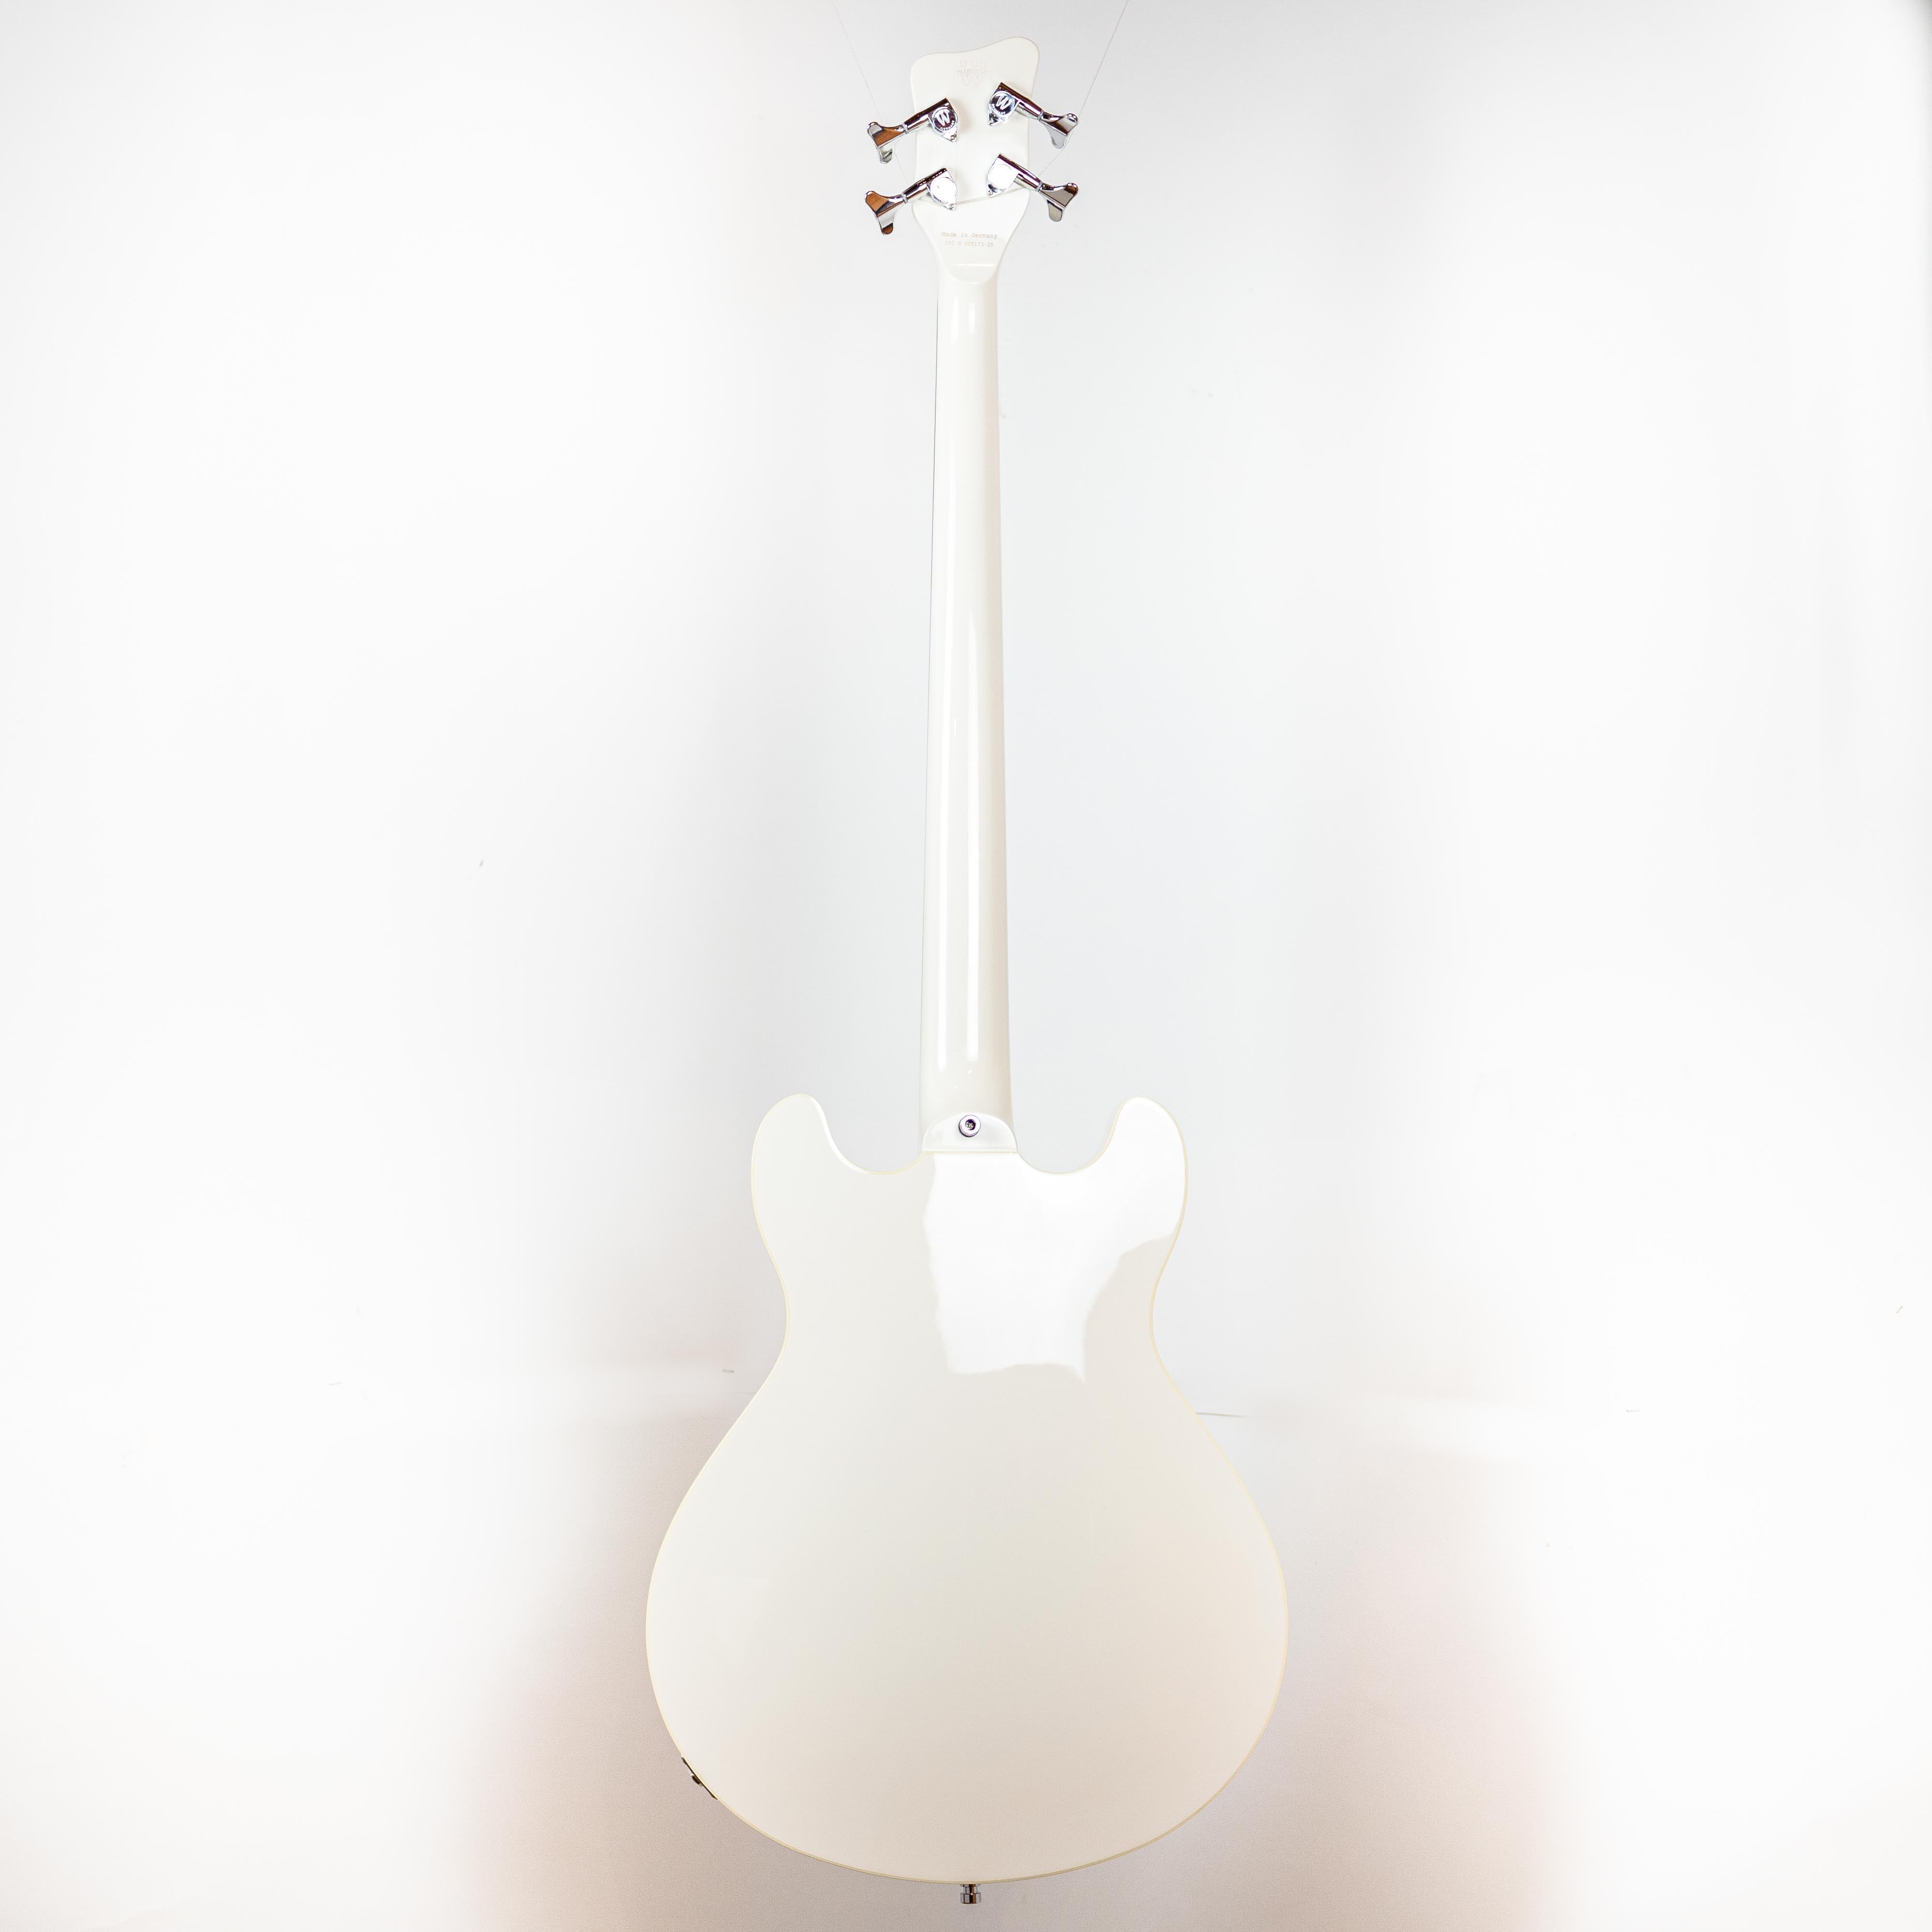 Warwick Pro Series Star Bass-4 String-Solid Creme White High Polish